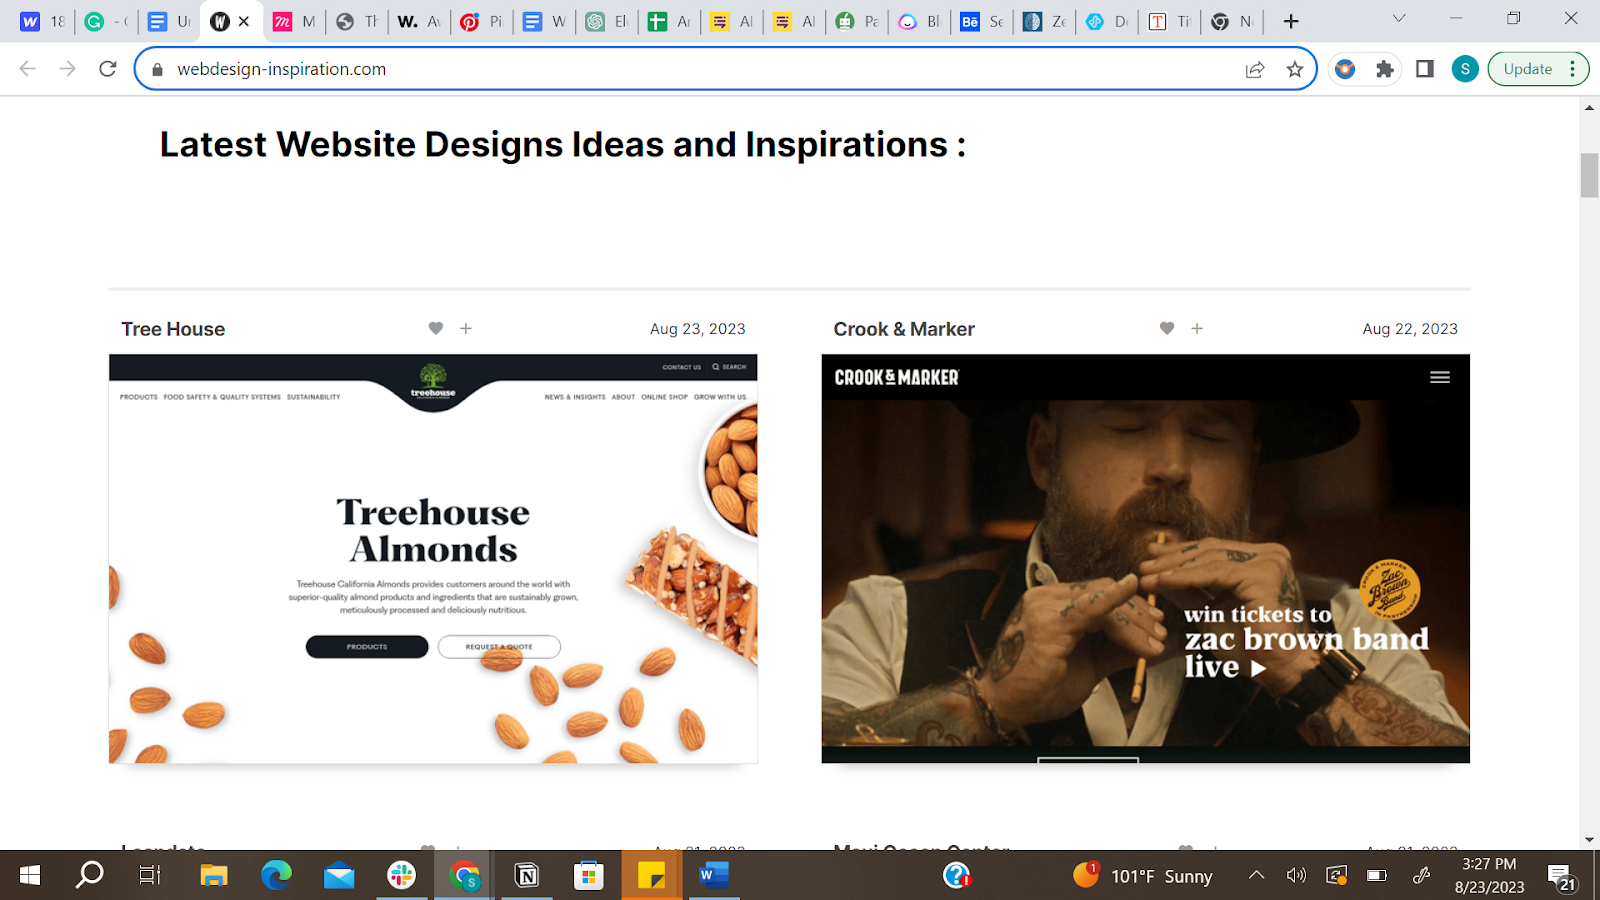 Webdesign-Inspiration’s website as a user-friendly platform that showcases designs